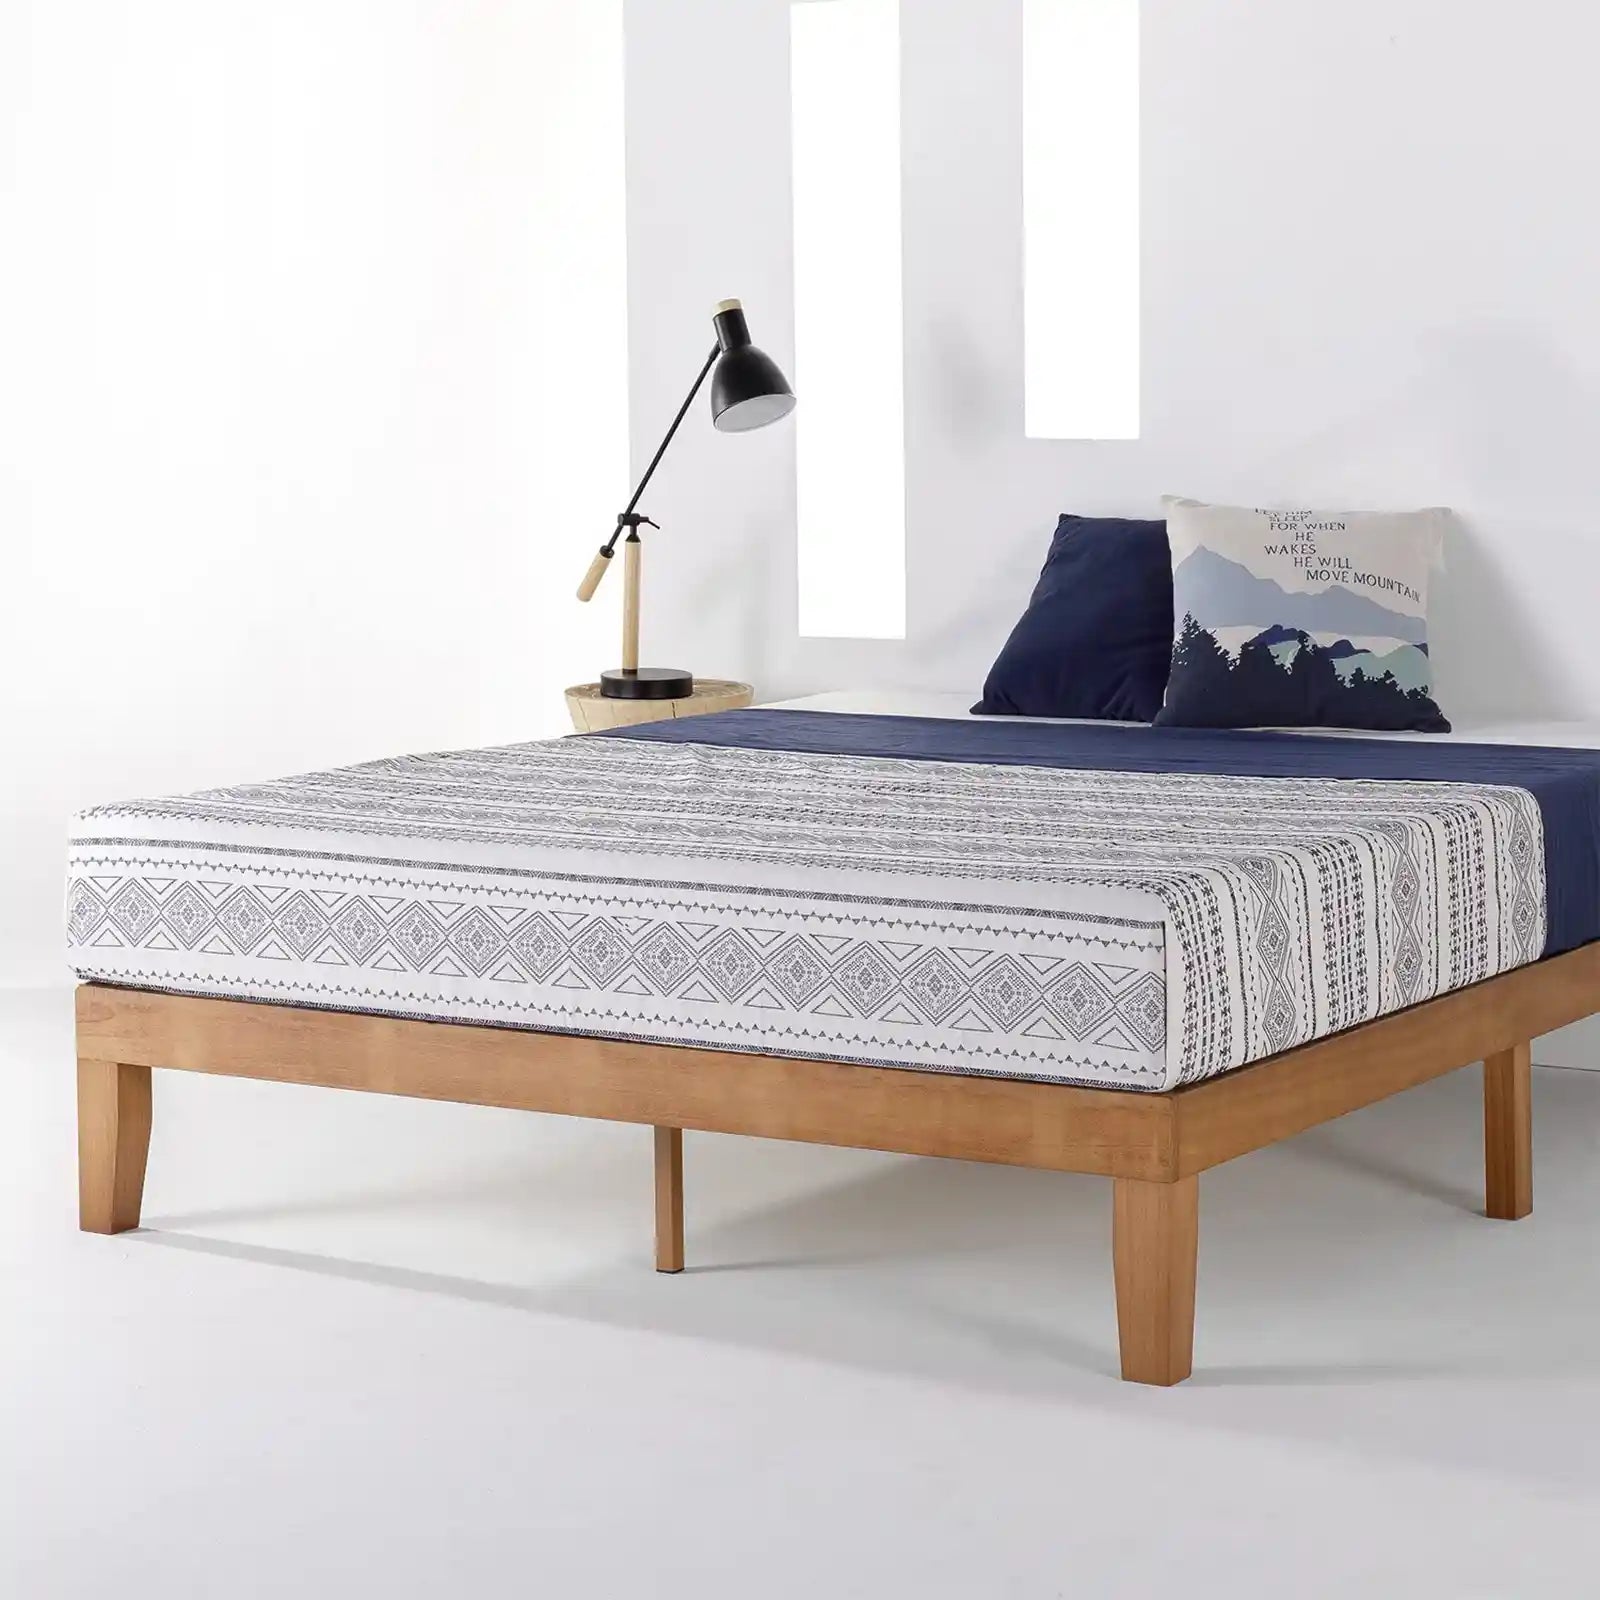 Solid Wood Platform Bed Frame with Headboard